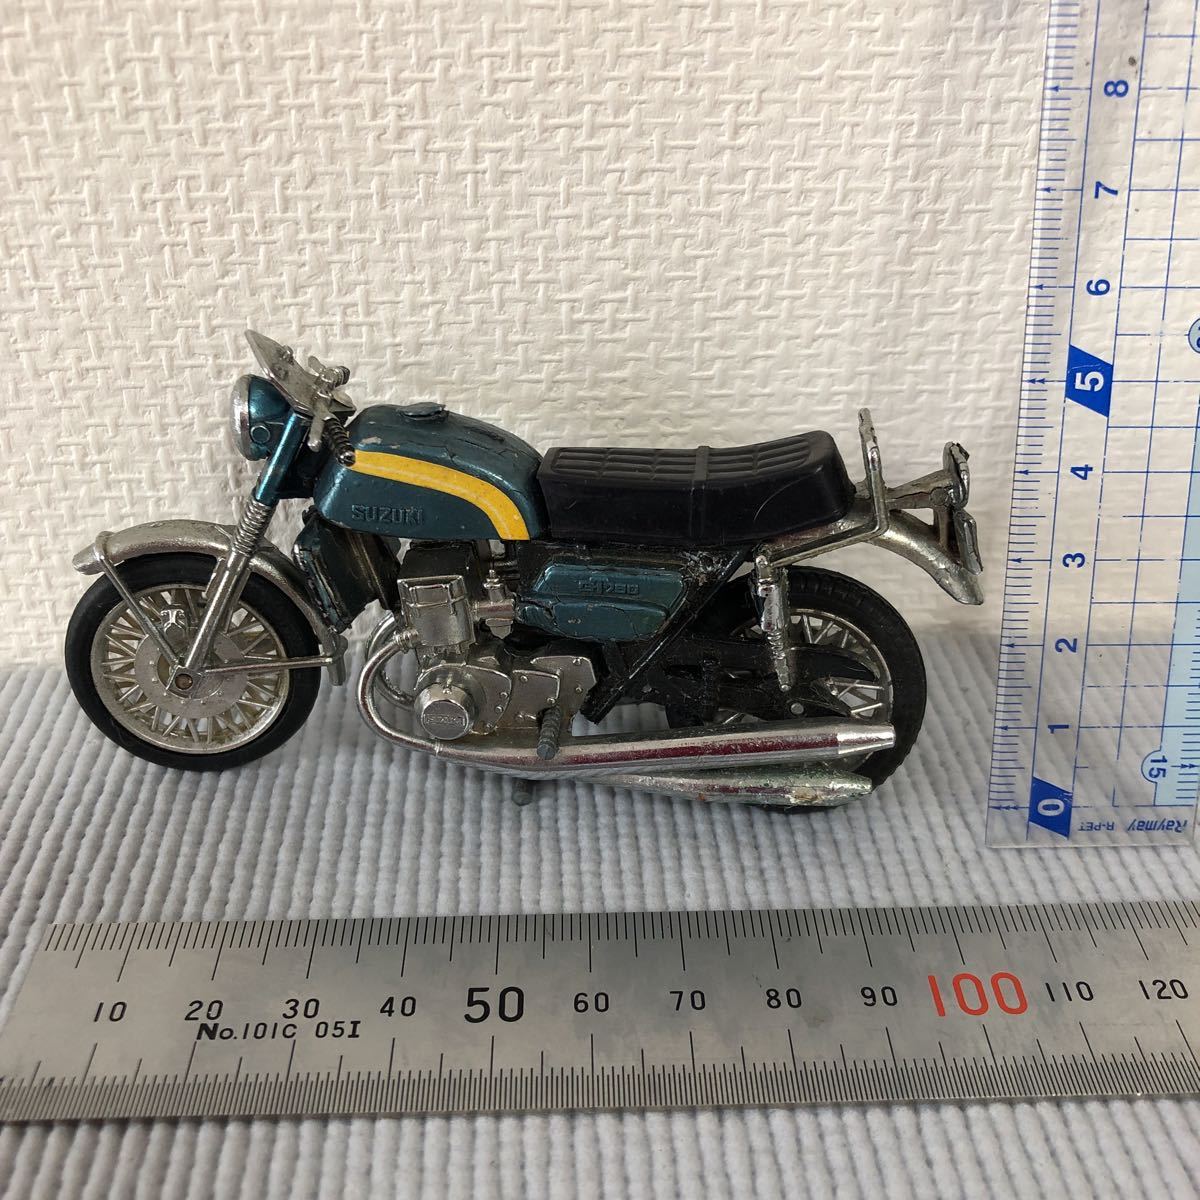  Suzuki GT750 мотоцикл миниатюра retro сплав 